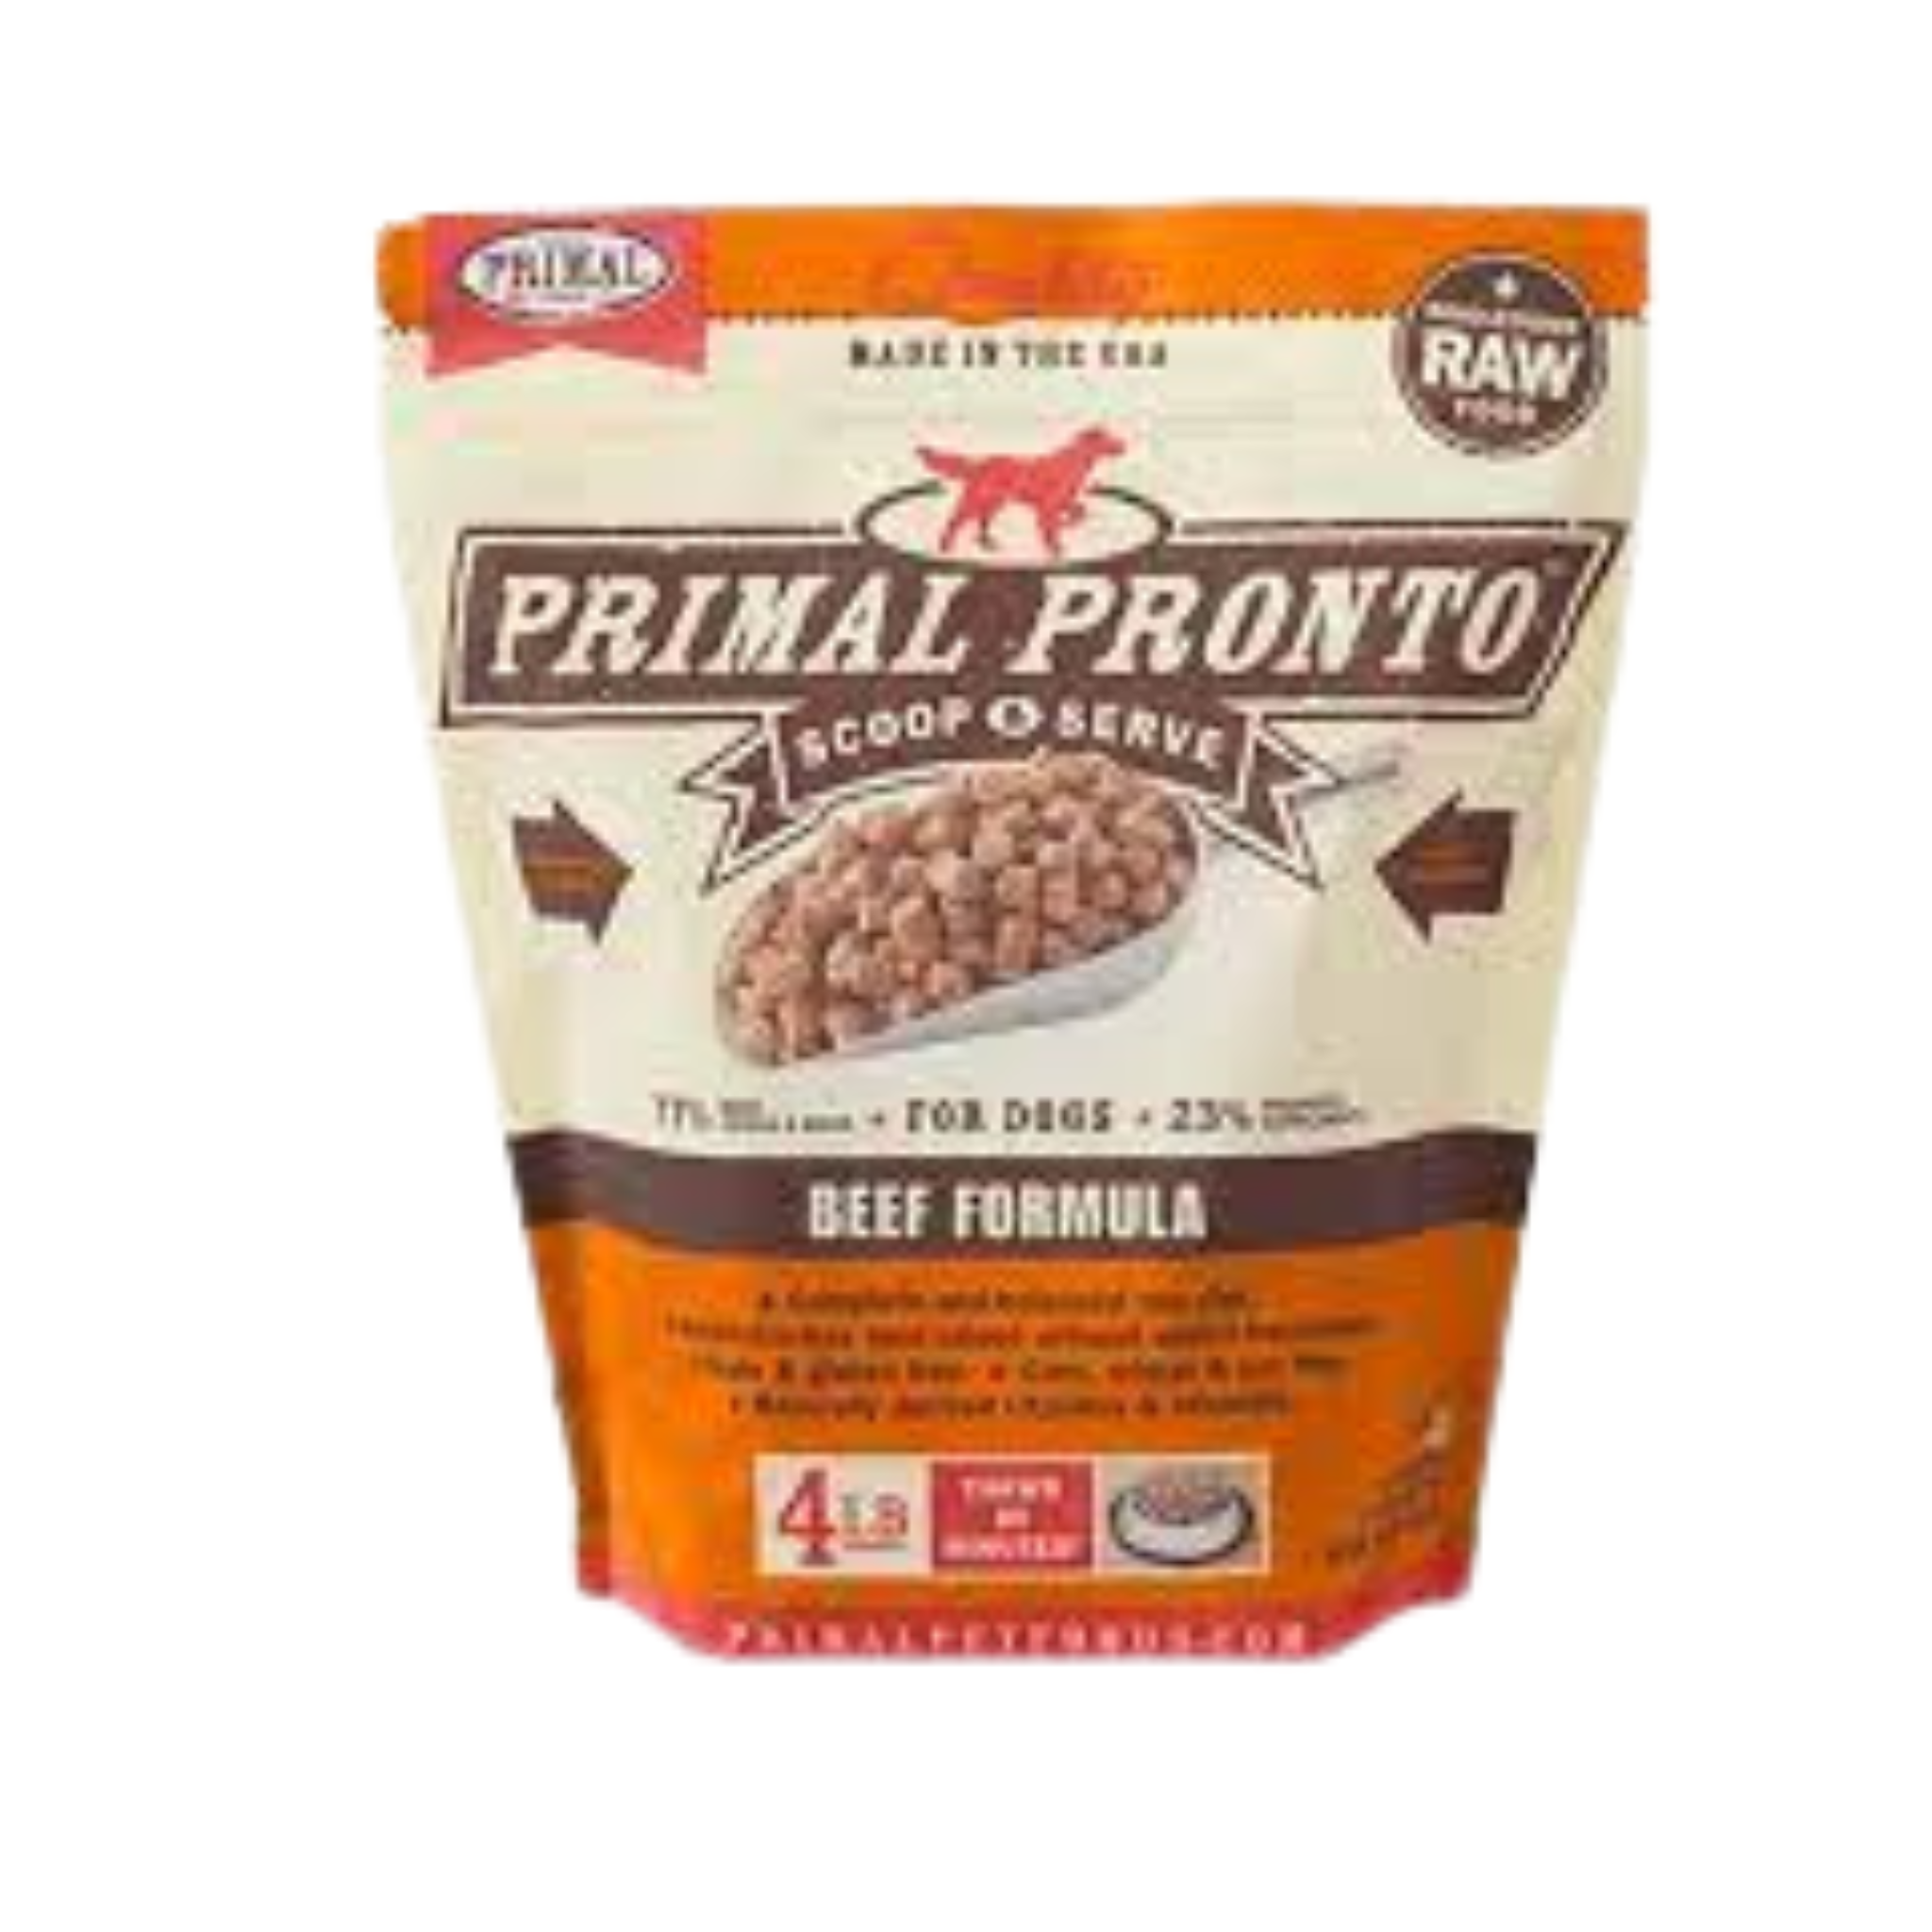 Primal Frozen Raw Dog Food- Pronto Beef